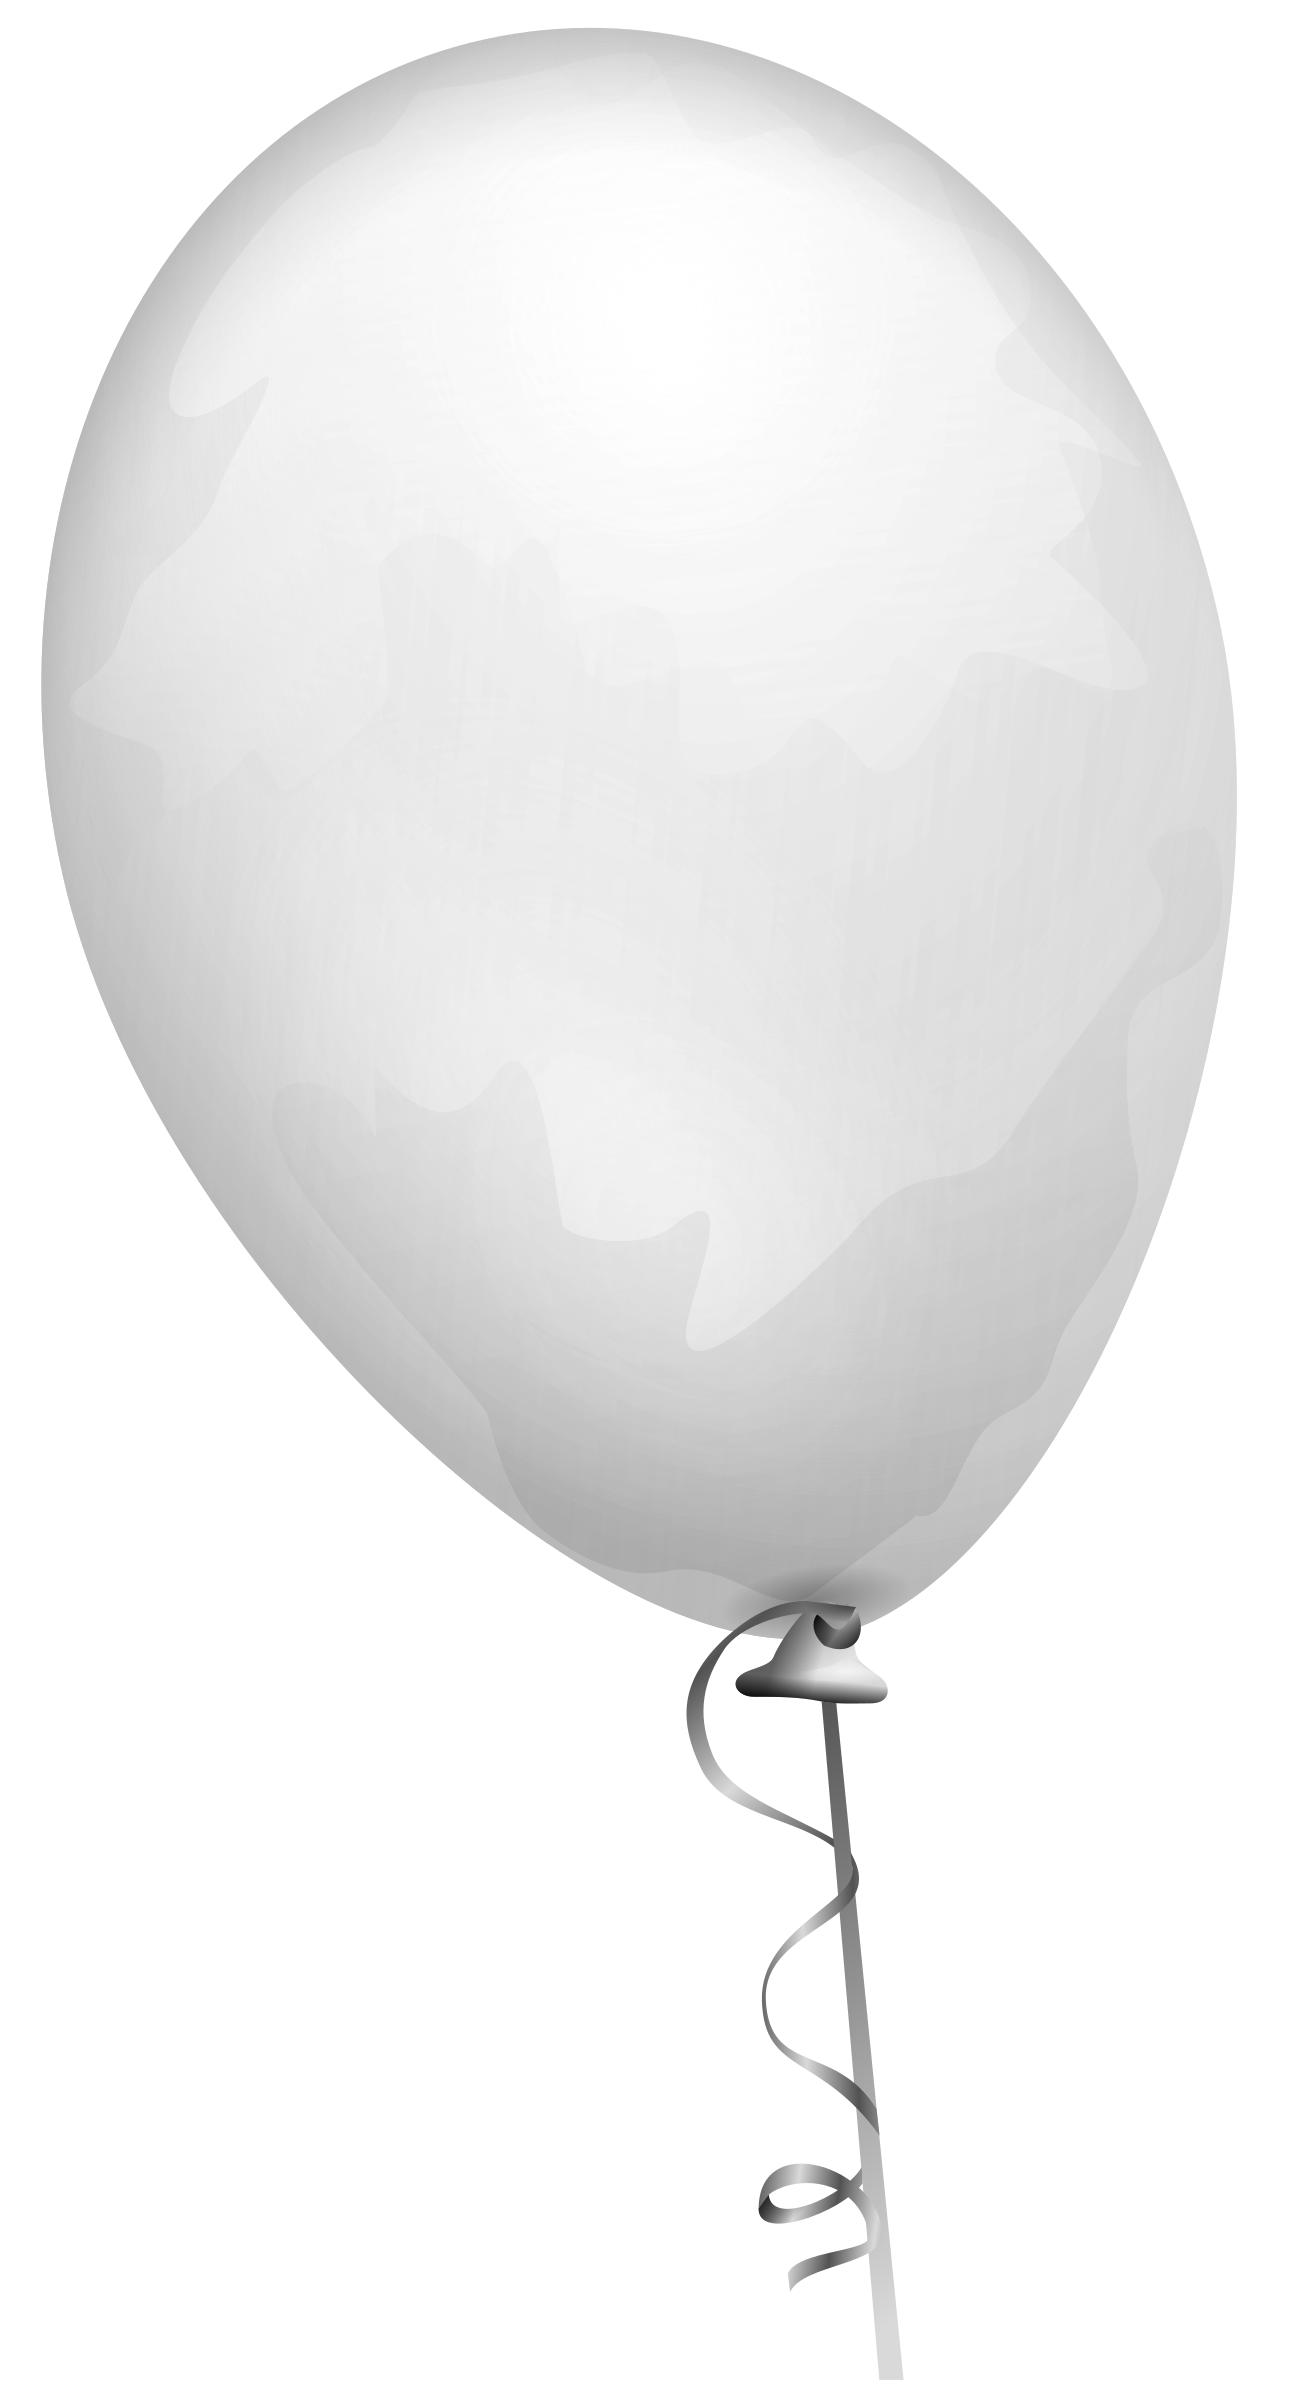 White balloon png